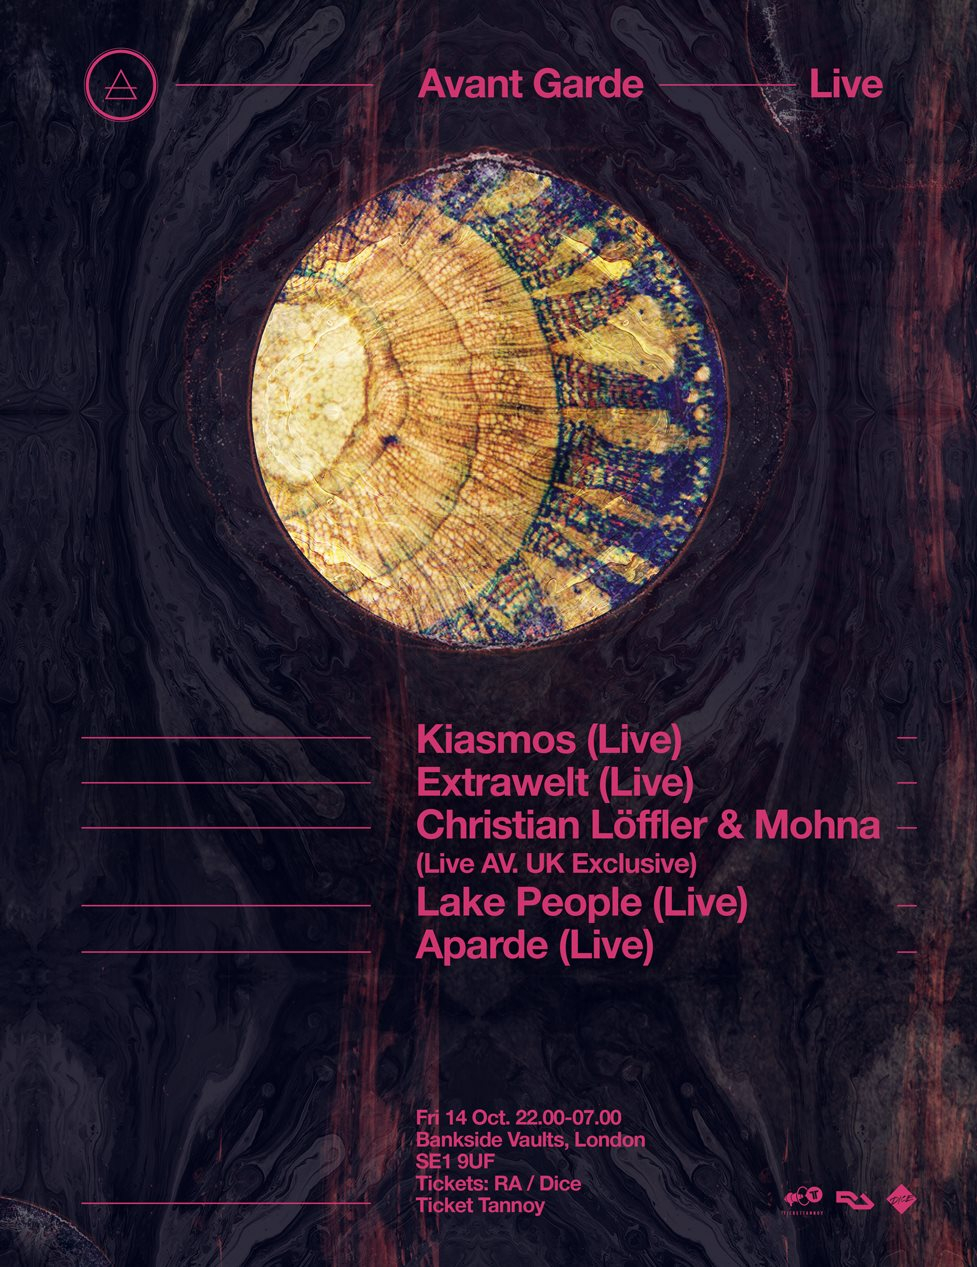 Avant Garde with Kiasmos (Live), Extrawelt (Live), Christian Loffler - Flyer front